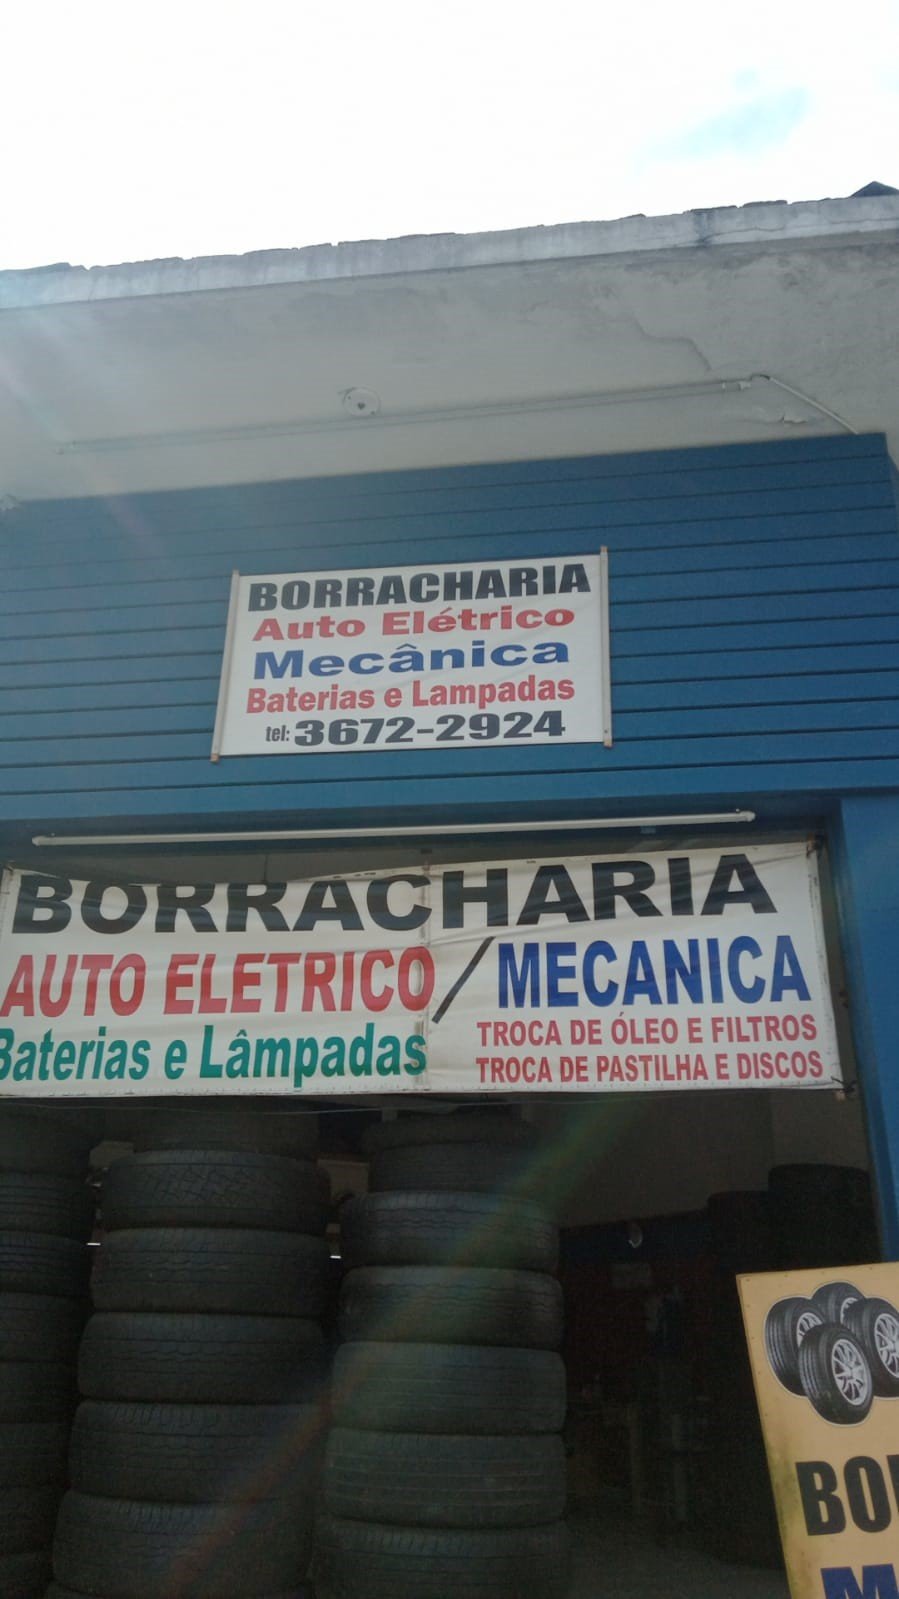 Borracharia Na Vila Madalena - Borracharia Moura